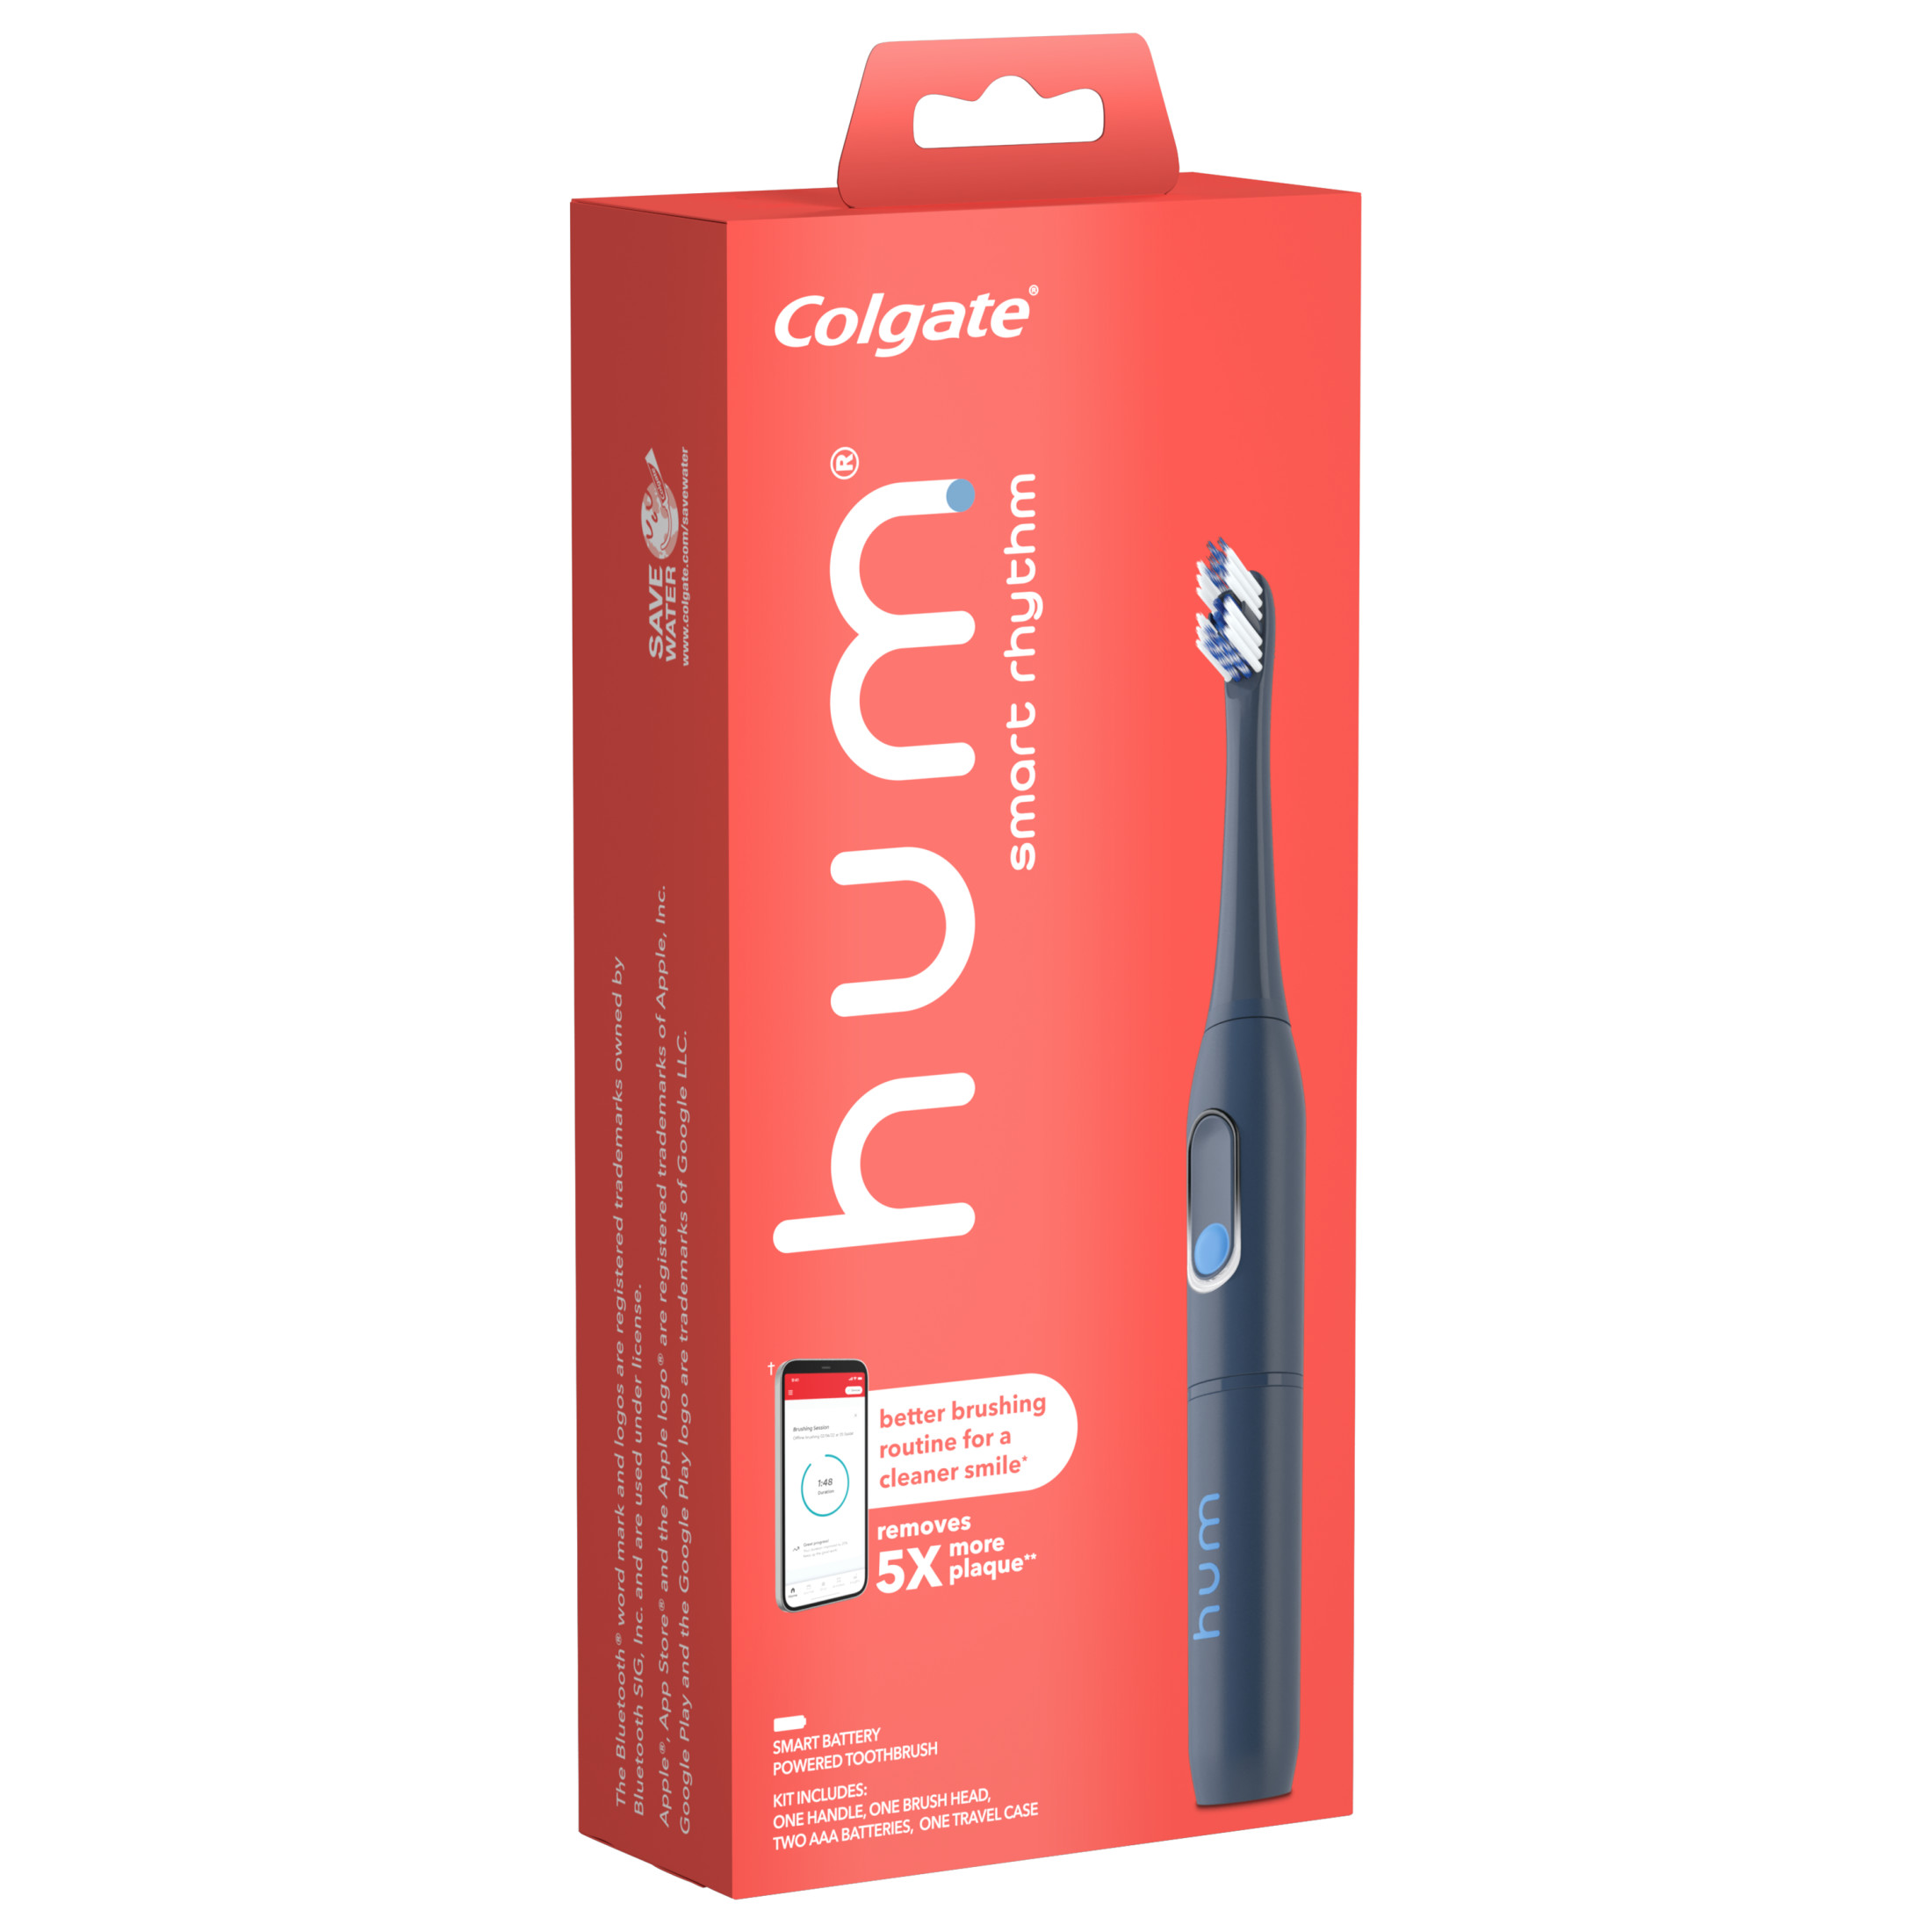 hum by Colgate Smart Rhythm Sonic Toothbrush Kit, Battery-Powered, Slate Grey - image 4 of 7